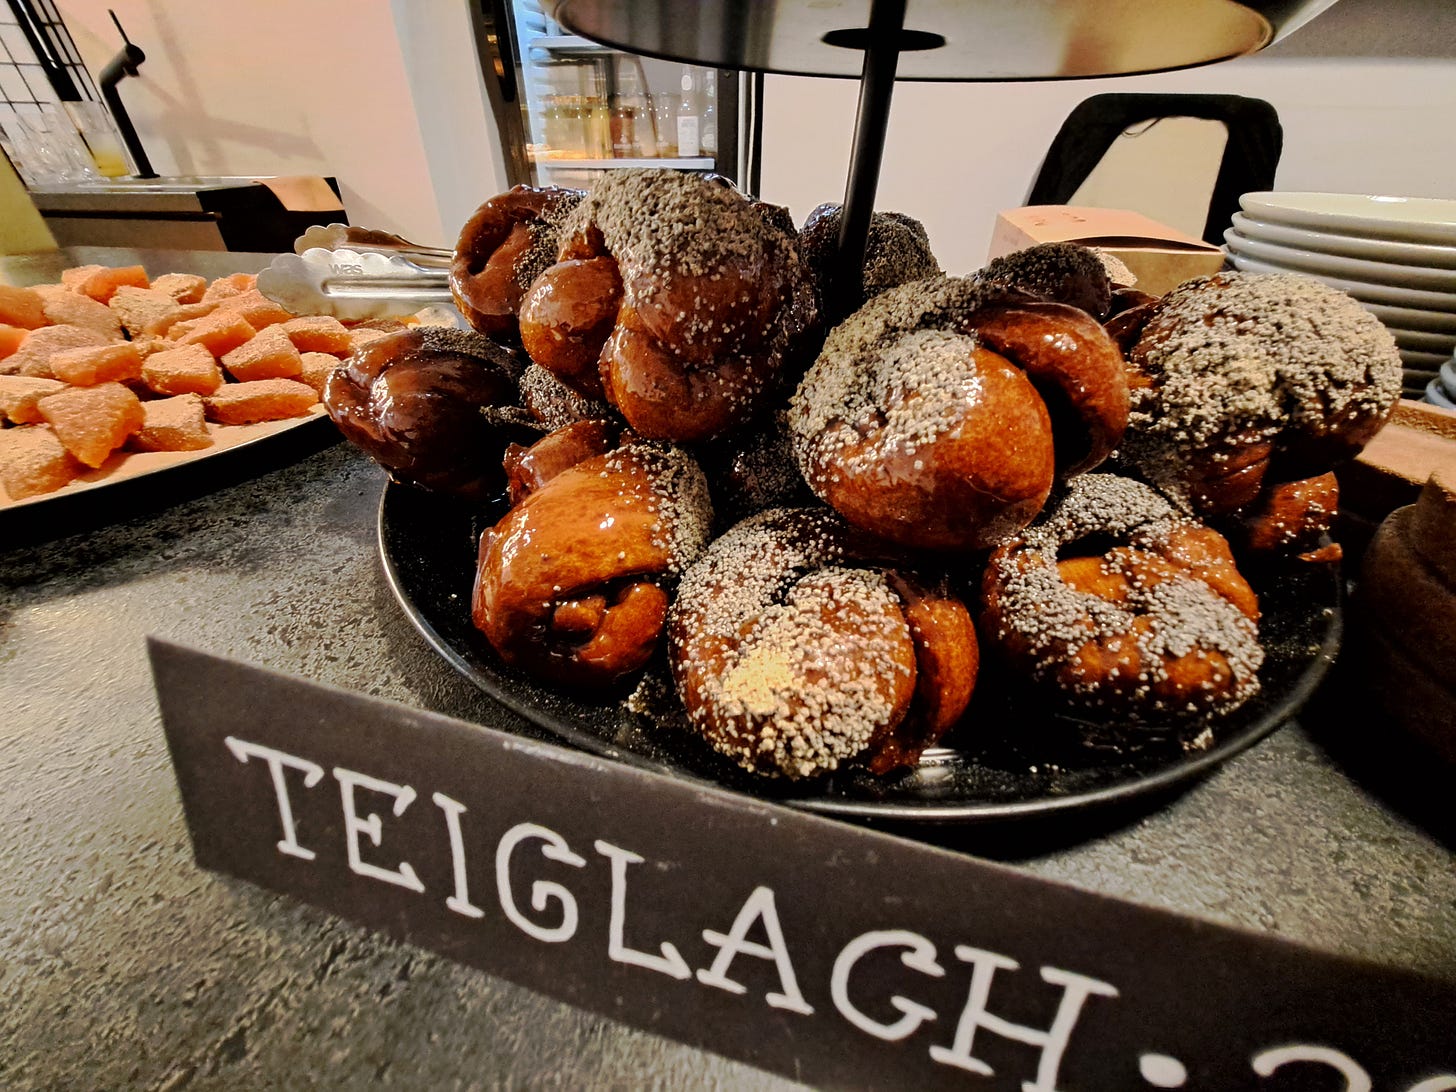 Teiglach at bakery counter in Vilnius, Lithuania